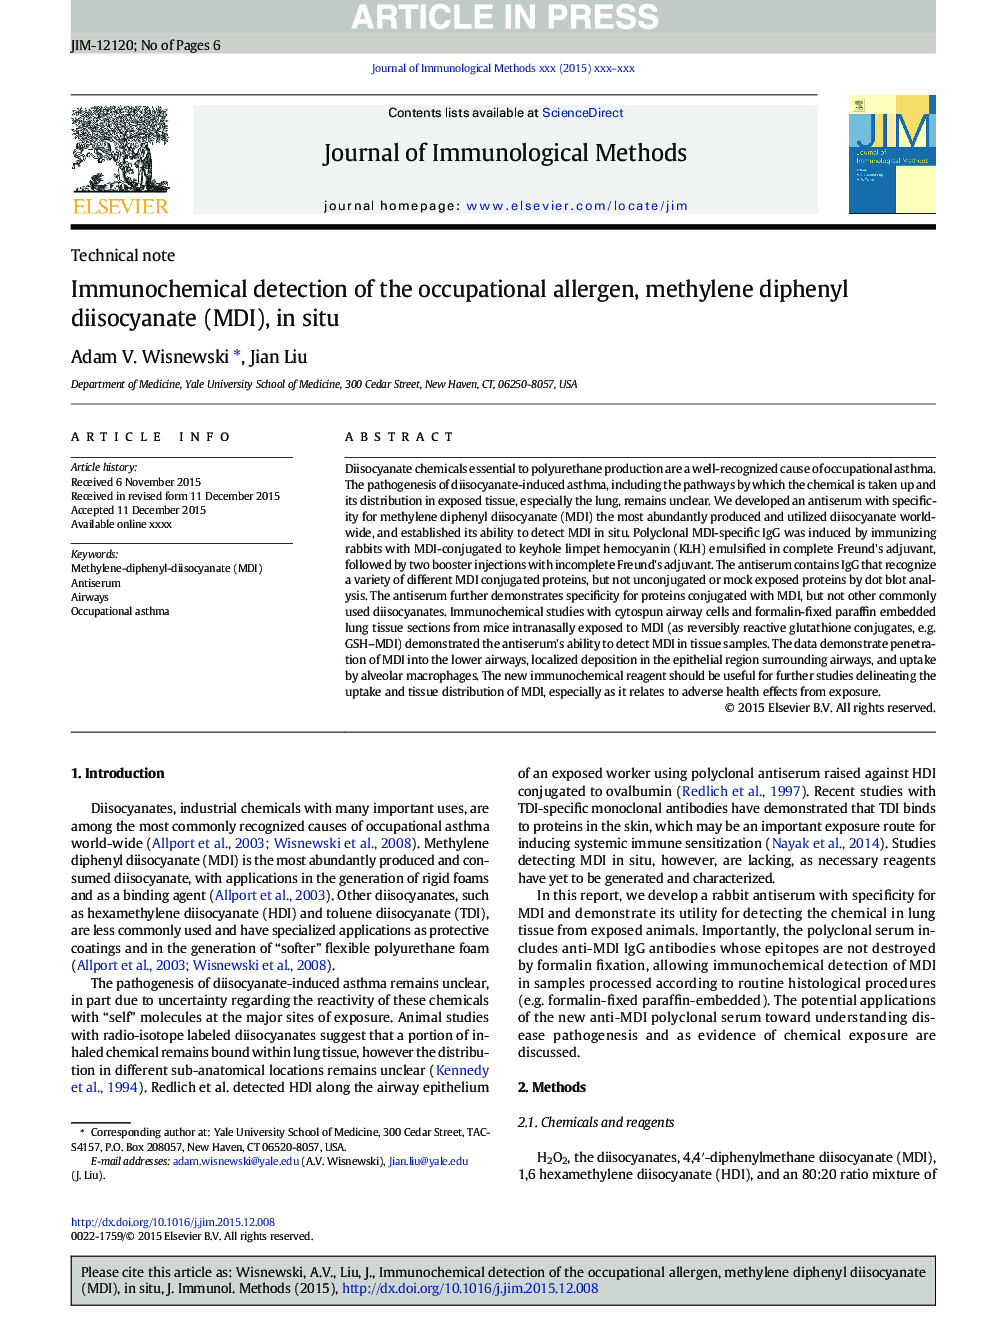 Immunochemical detection of the occupational allergen, methylene diphenyl diisocyanate (MDI), in situ